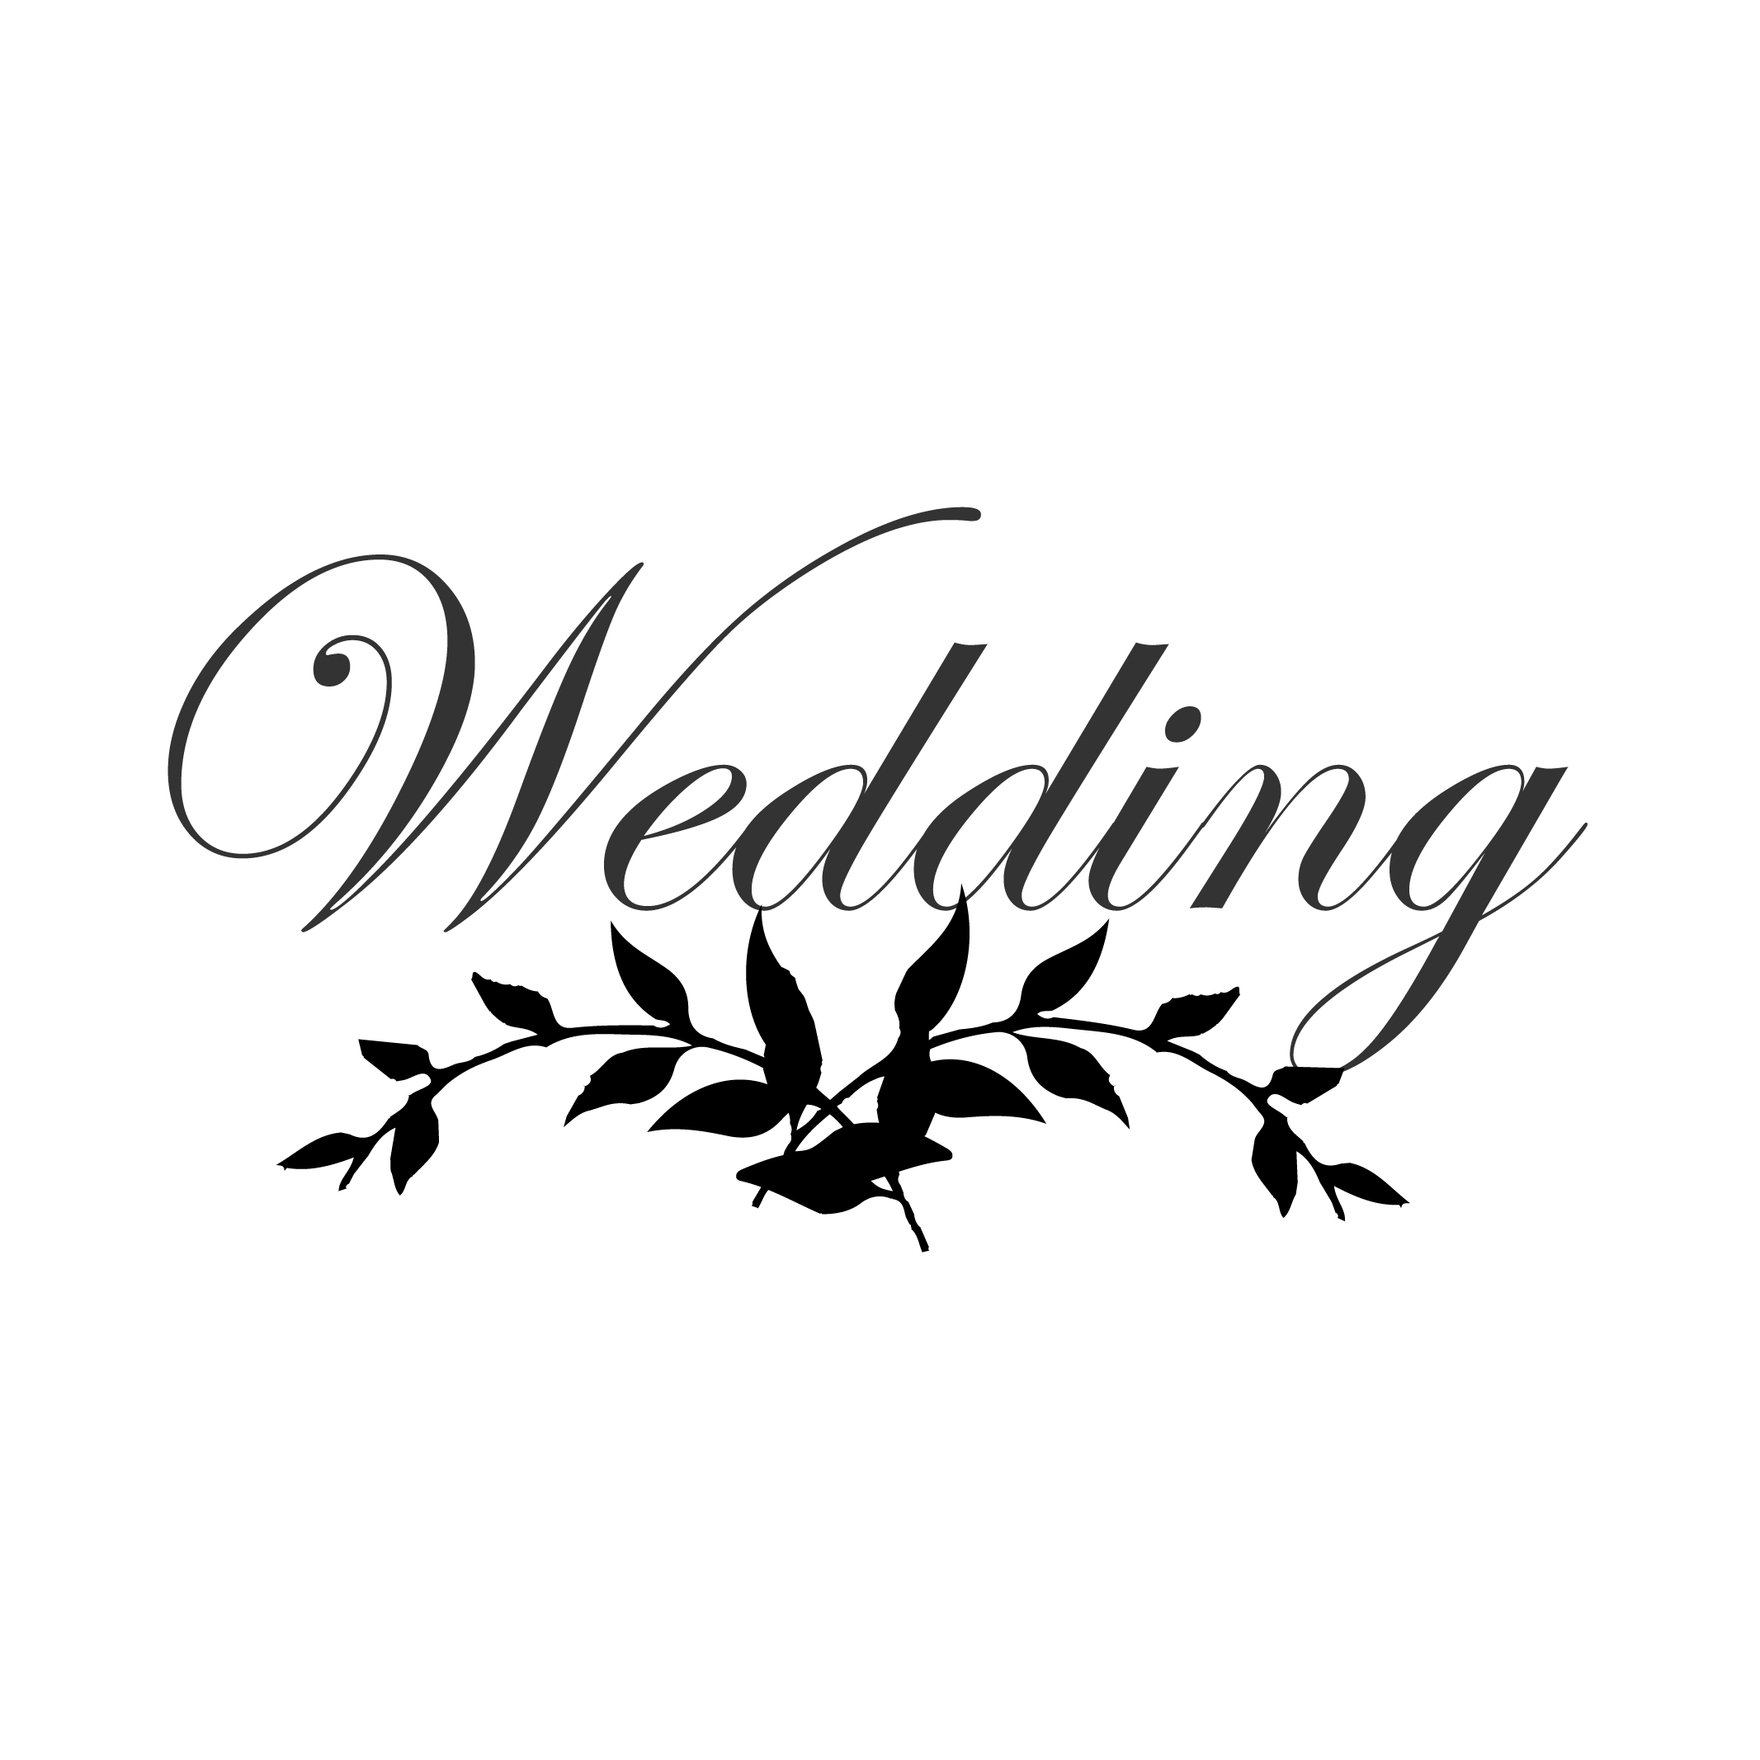 Free Wedding Title Silhouette in Illustrator, EPS, SVG, JPG, PNG